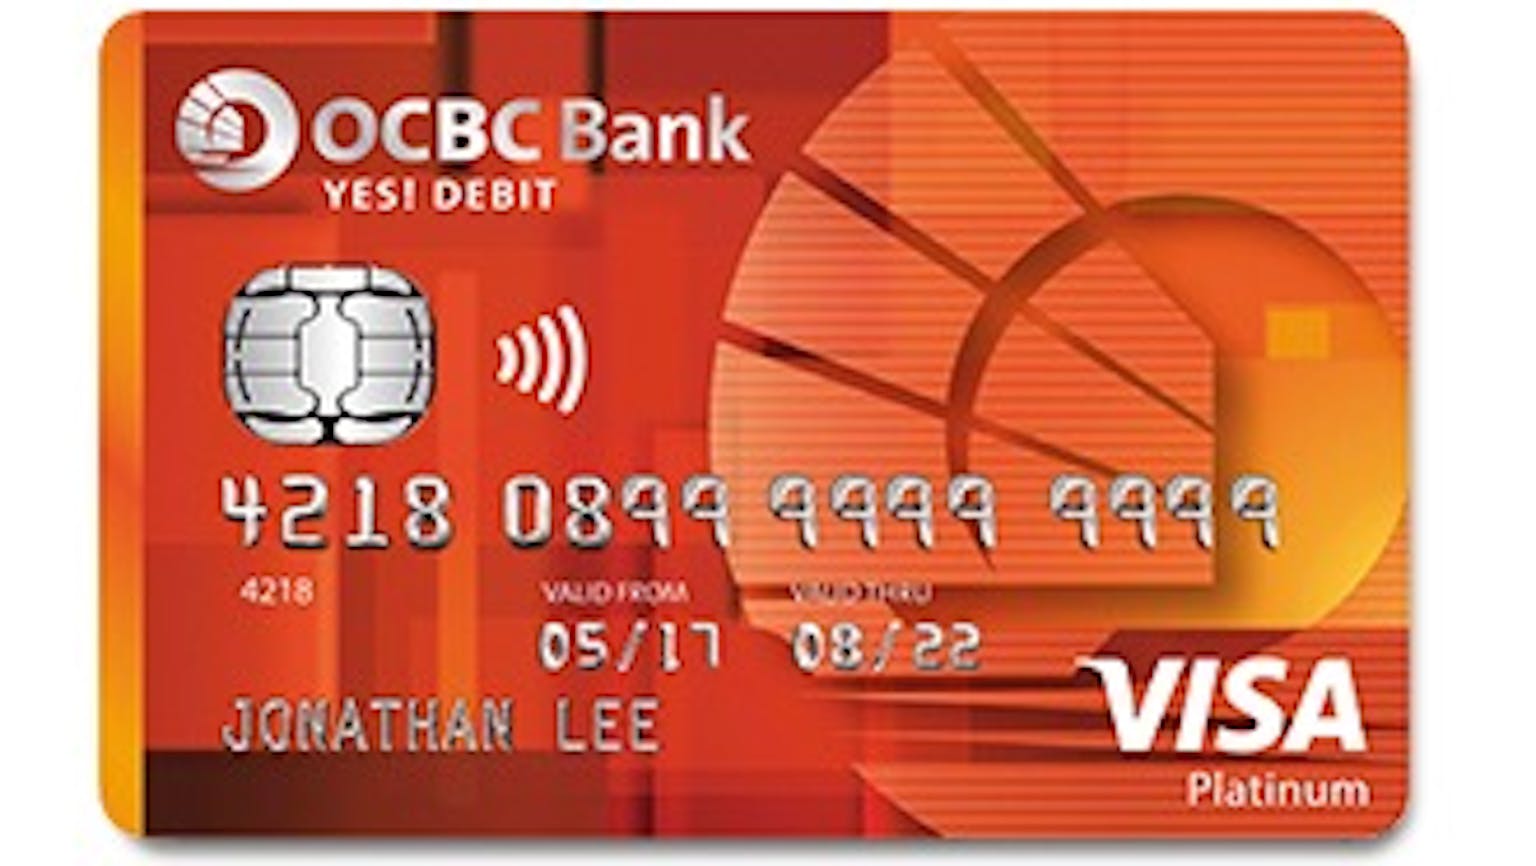 OCBC YES! Debit Card